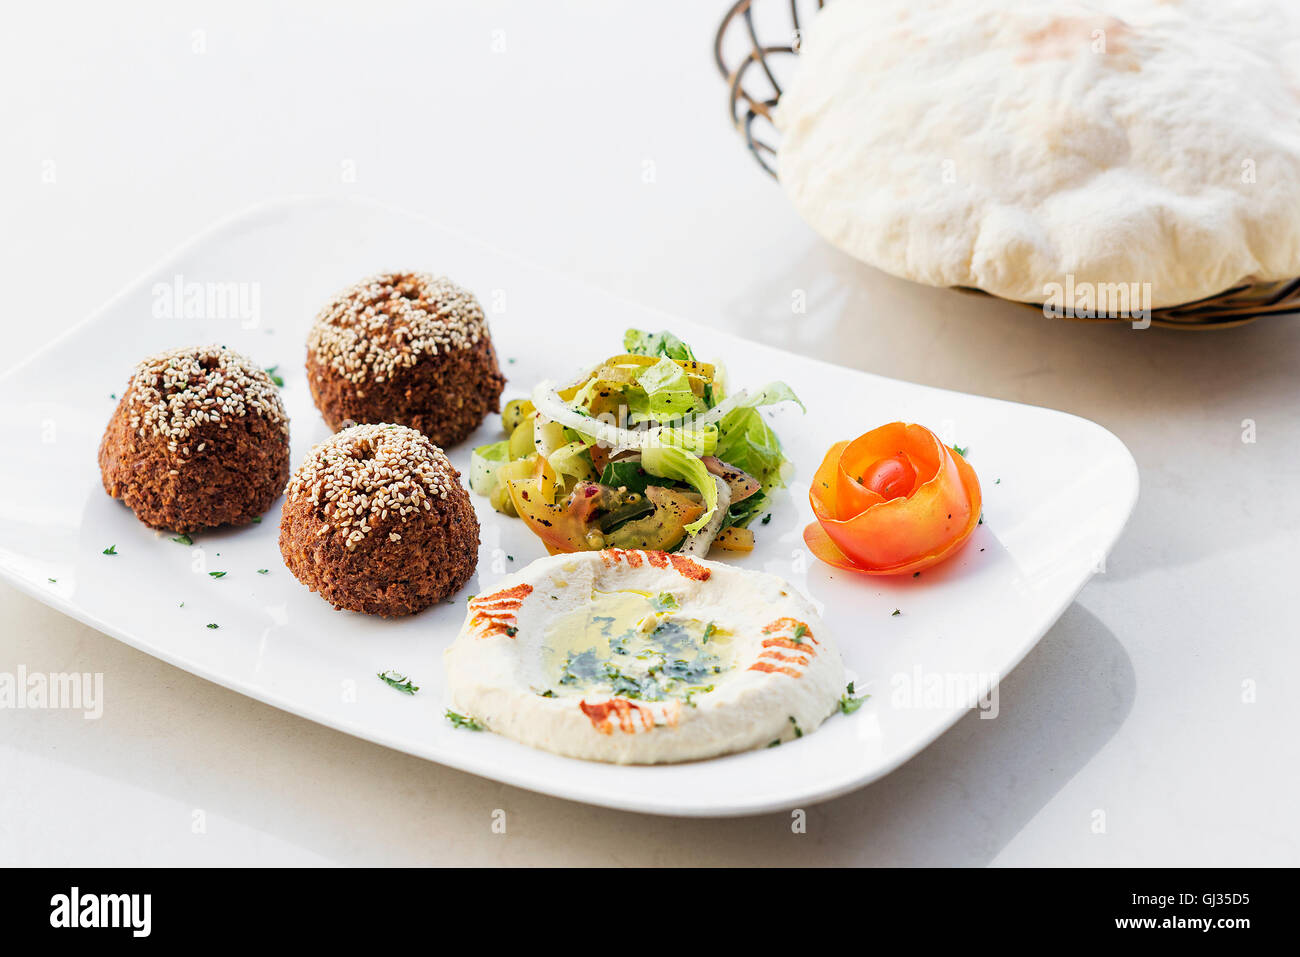 falafel hummus houmus starter snack middle eastern food mezze platter Stock Photo